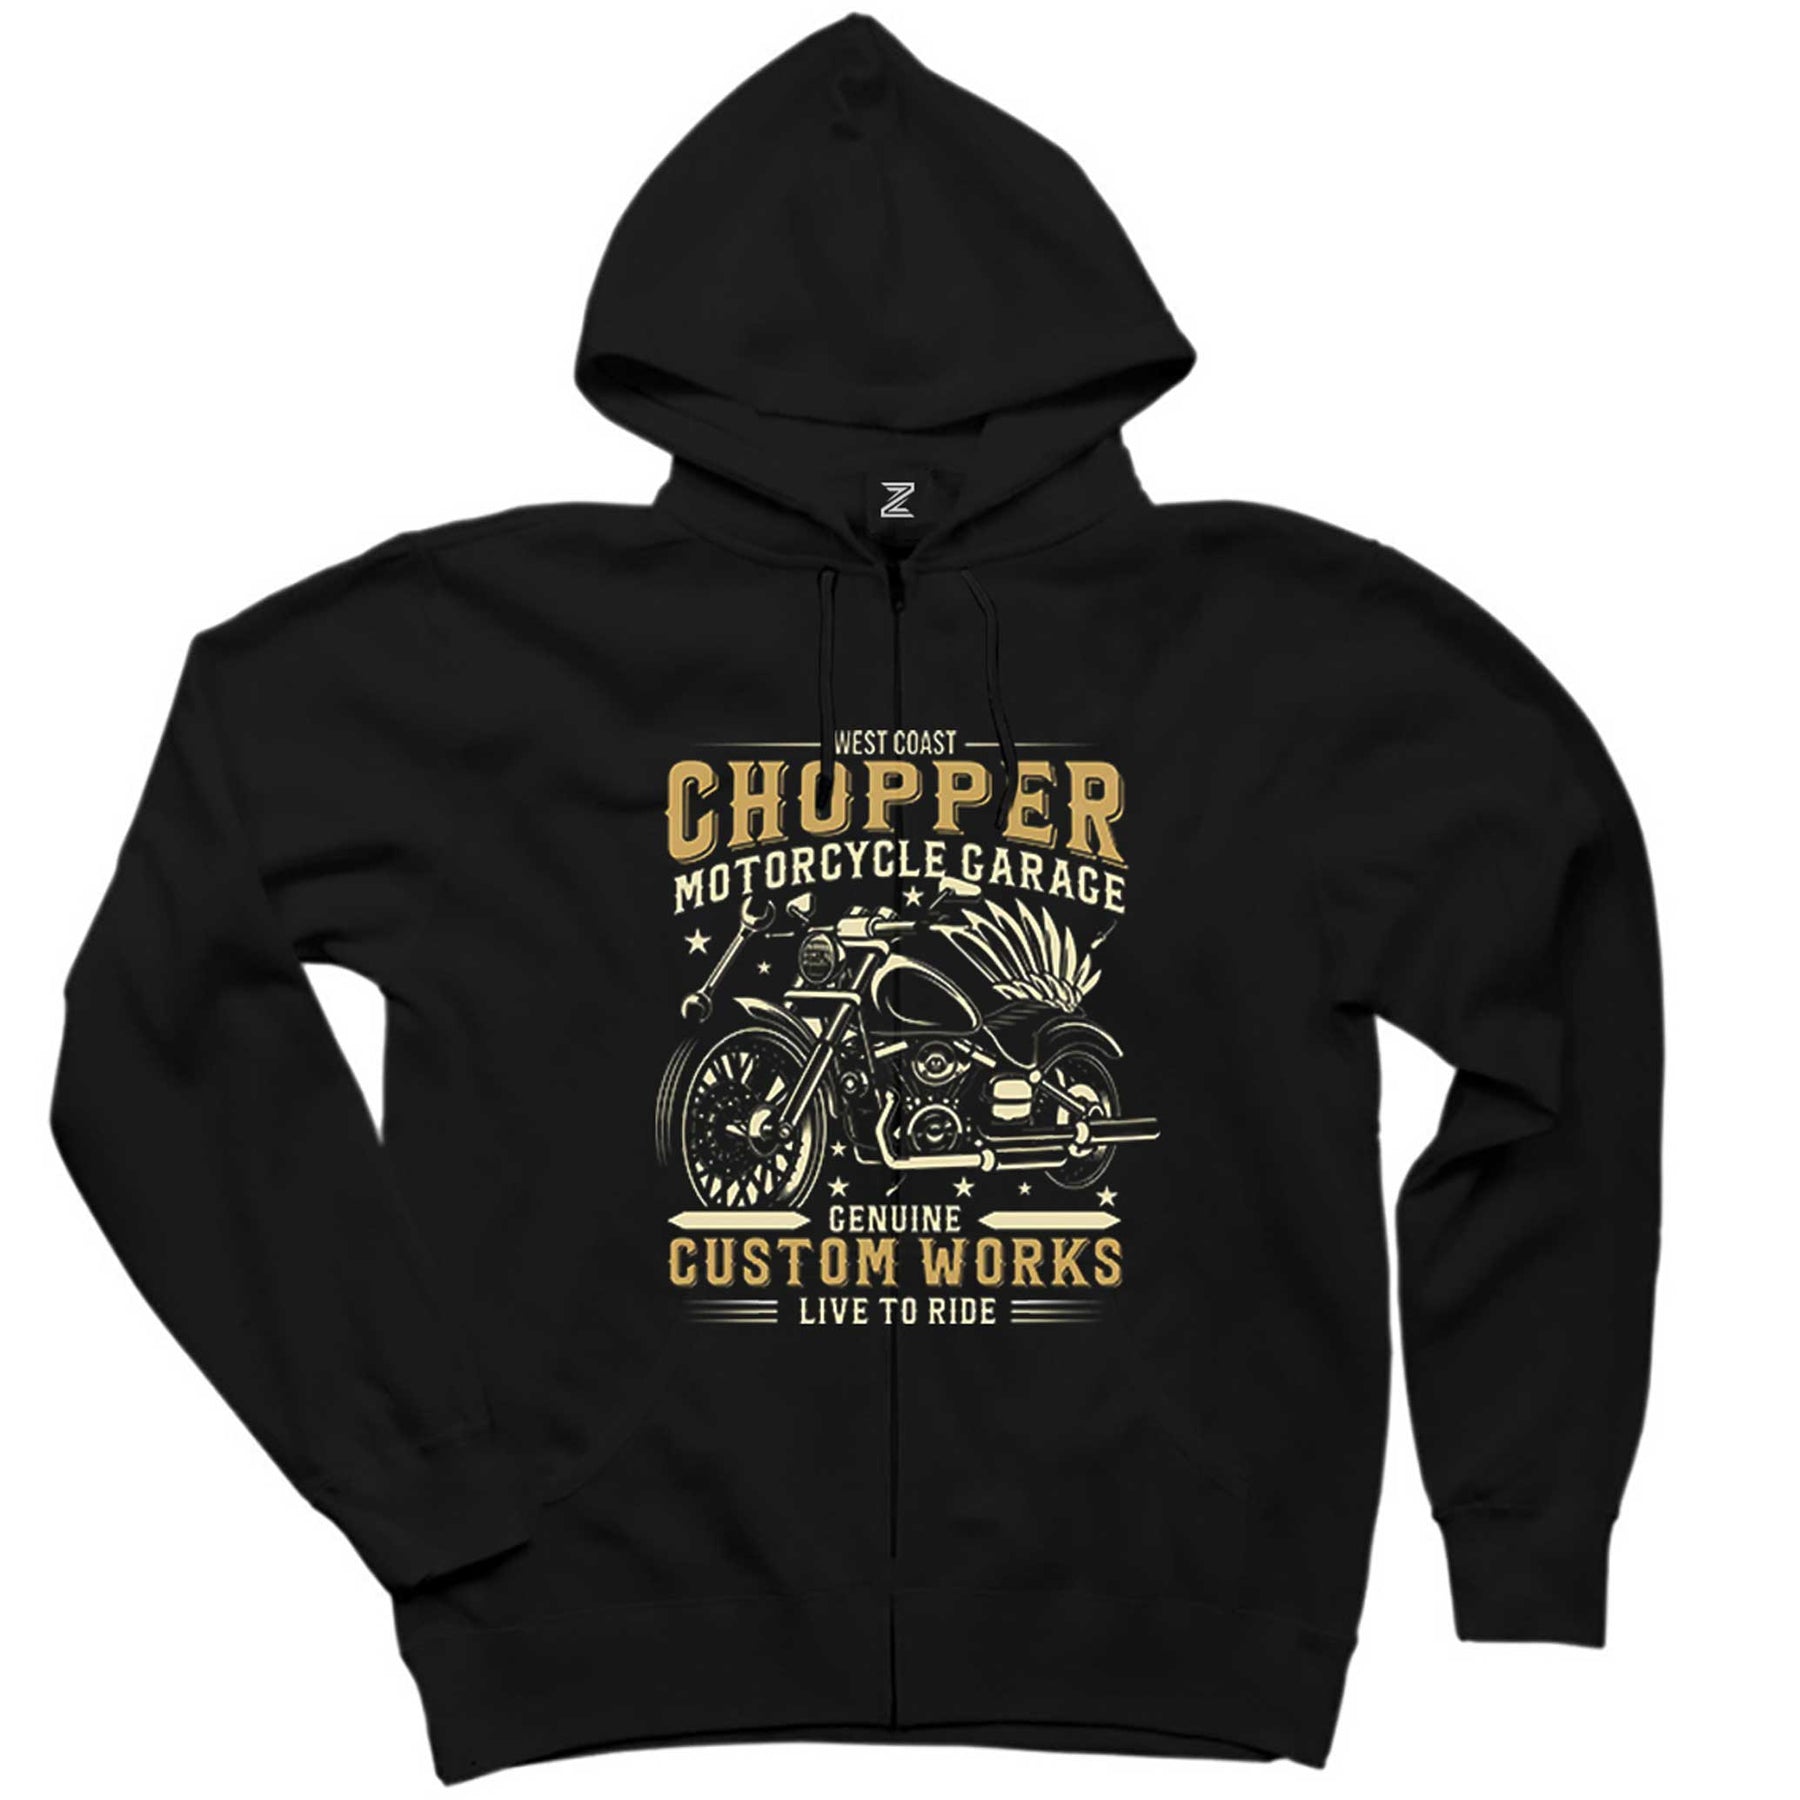 West Coast Chopper Motorcycle Zippered Hooded Sweatshirt